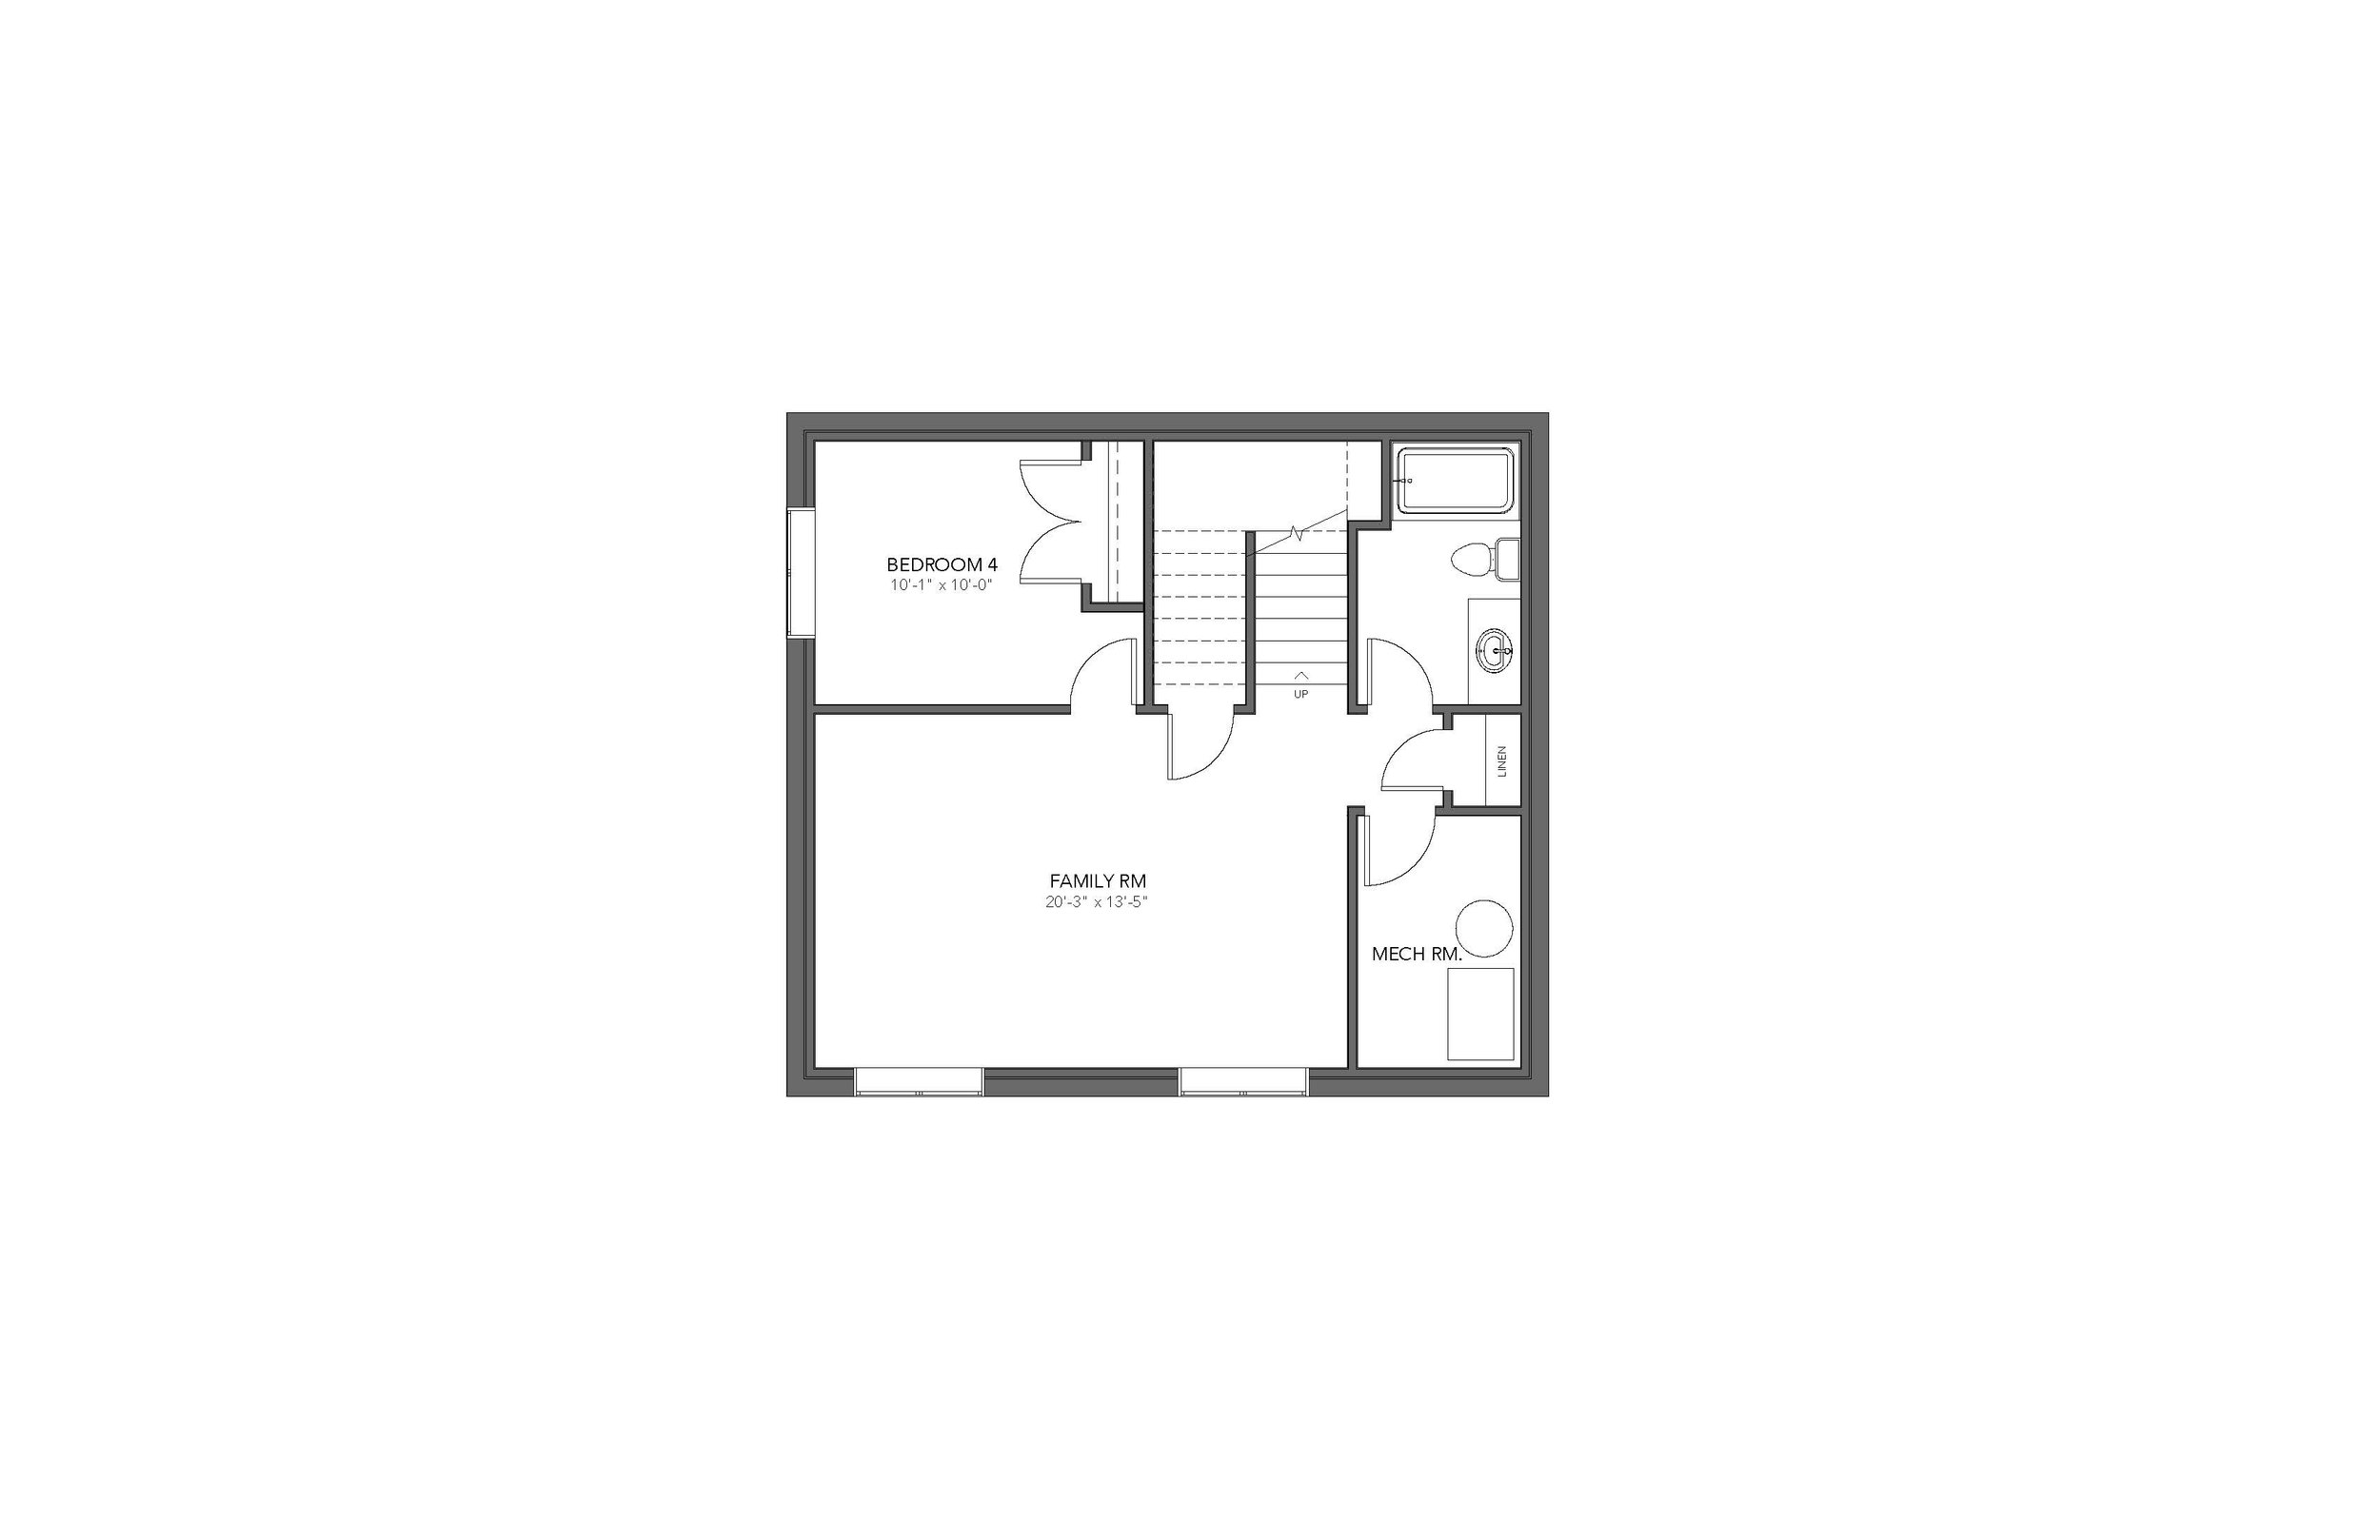 Future Lower Floor Plan (Copy)